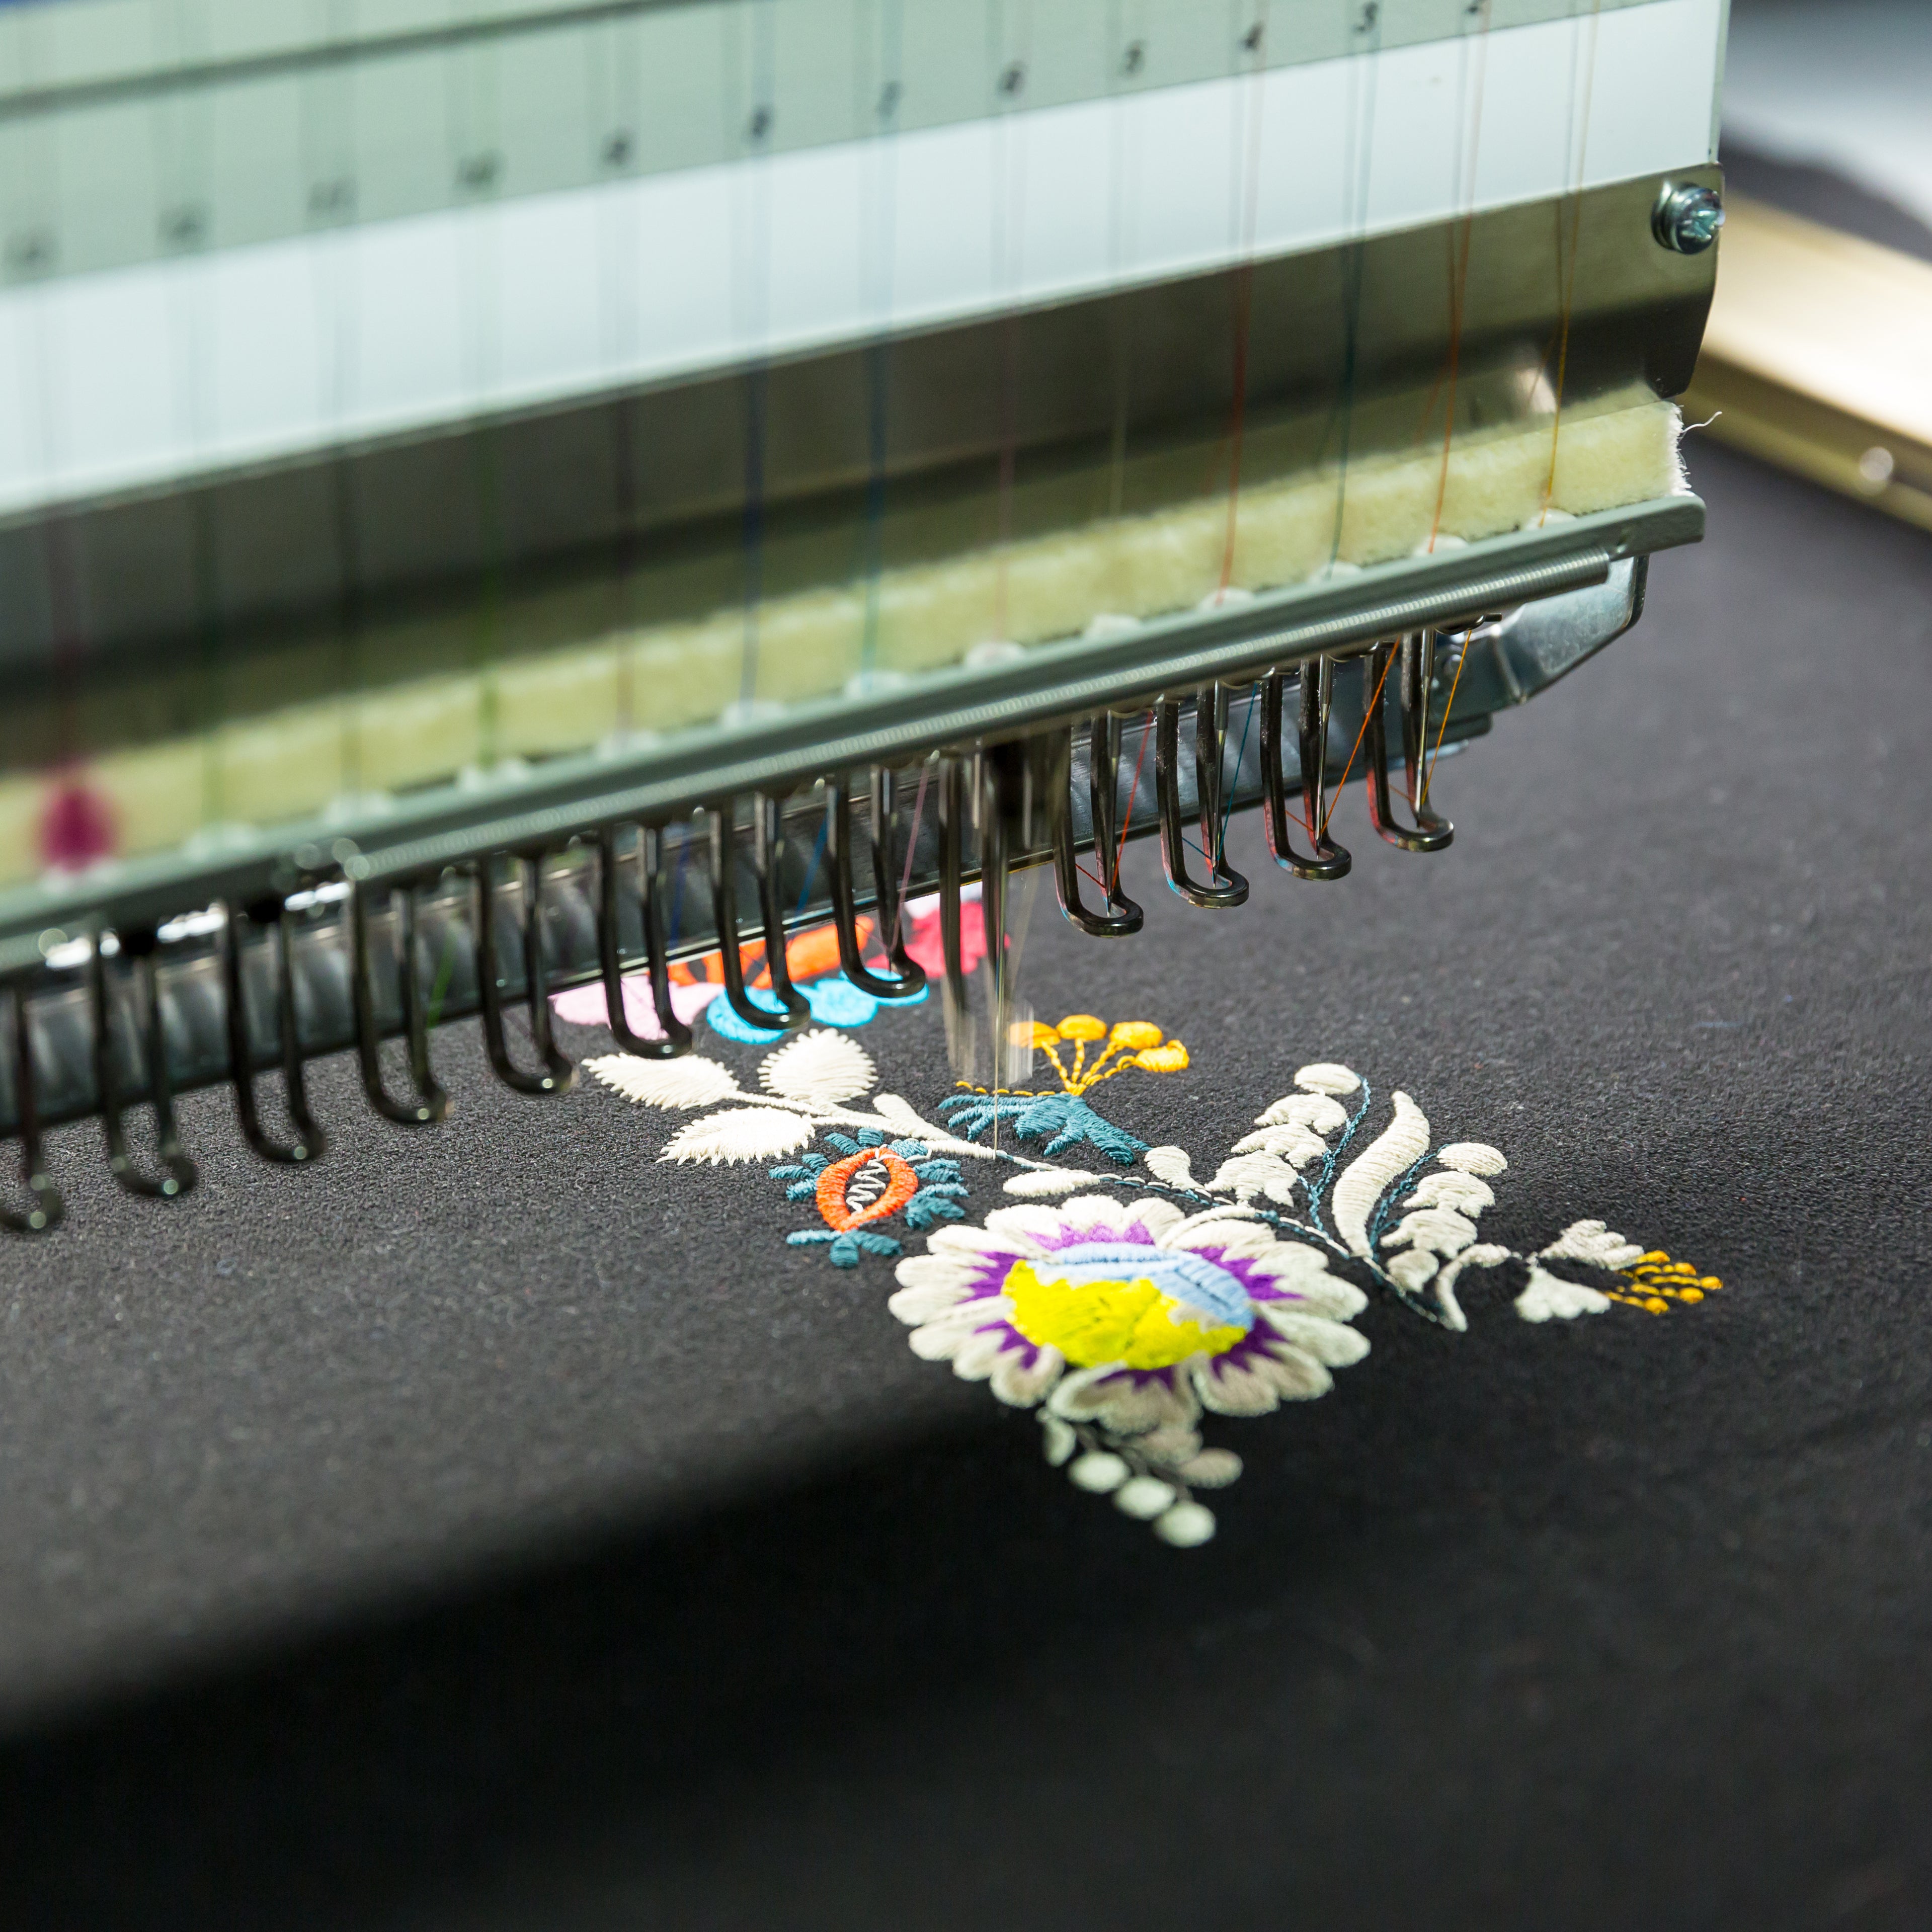 sewing-machine-in-work-textile-fabric-nobody-2021-08-26-16-25-53-utc - Tag&Crew